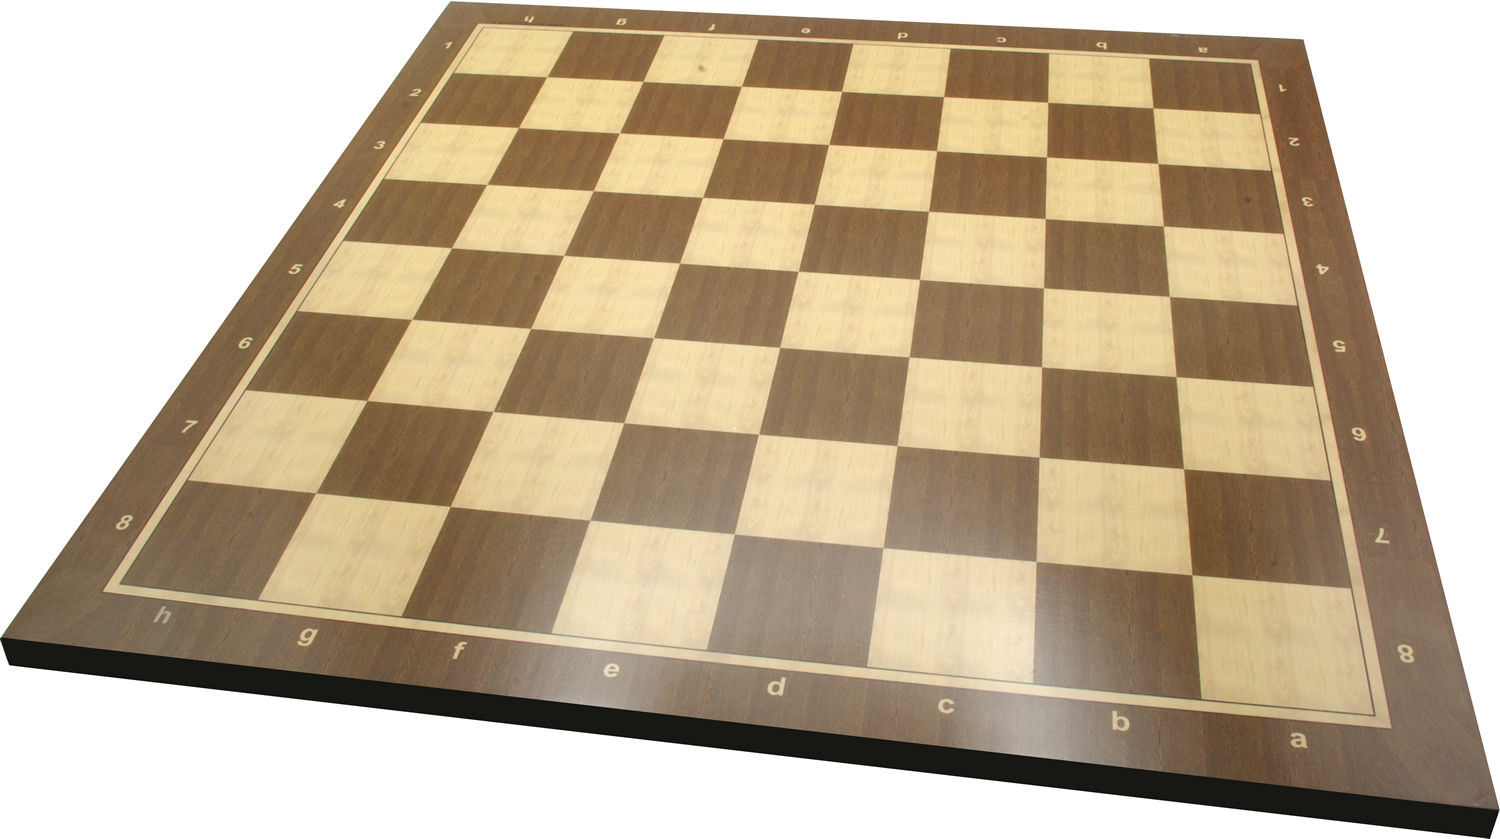 Wood Chess Board No 4 - 50 x 50cm, Sycamore & Walnut